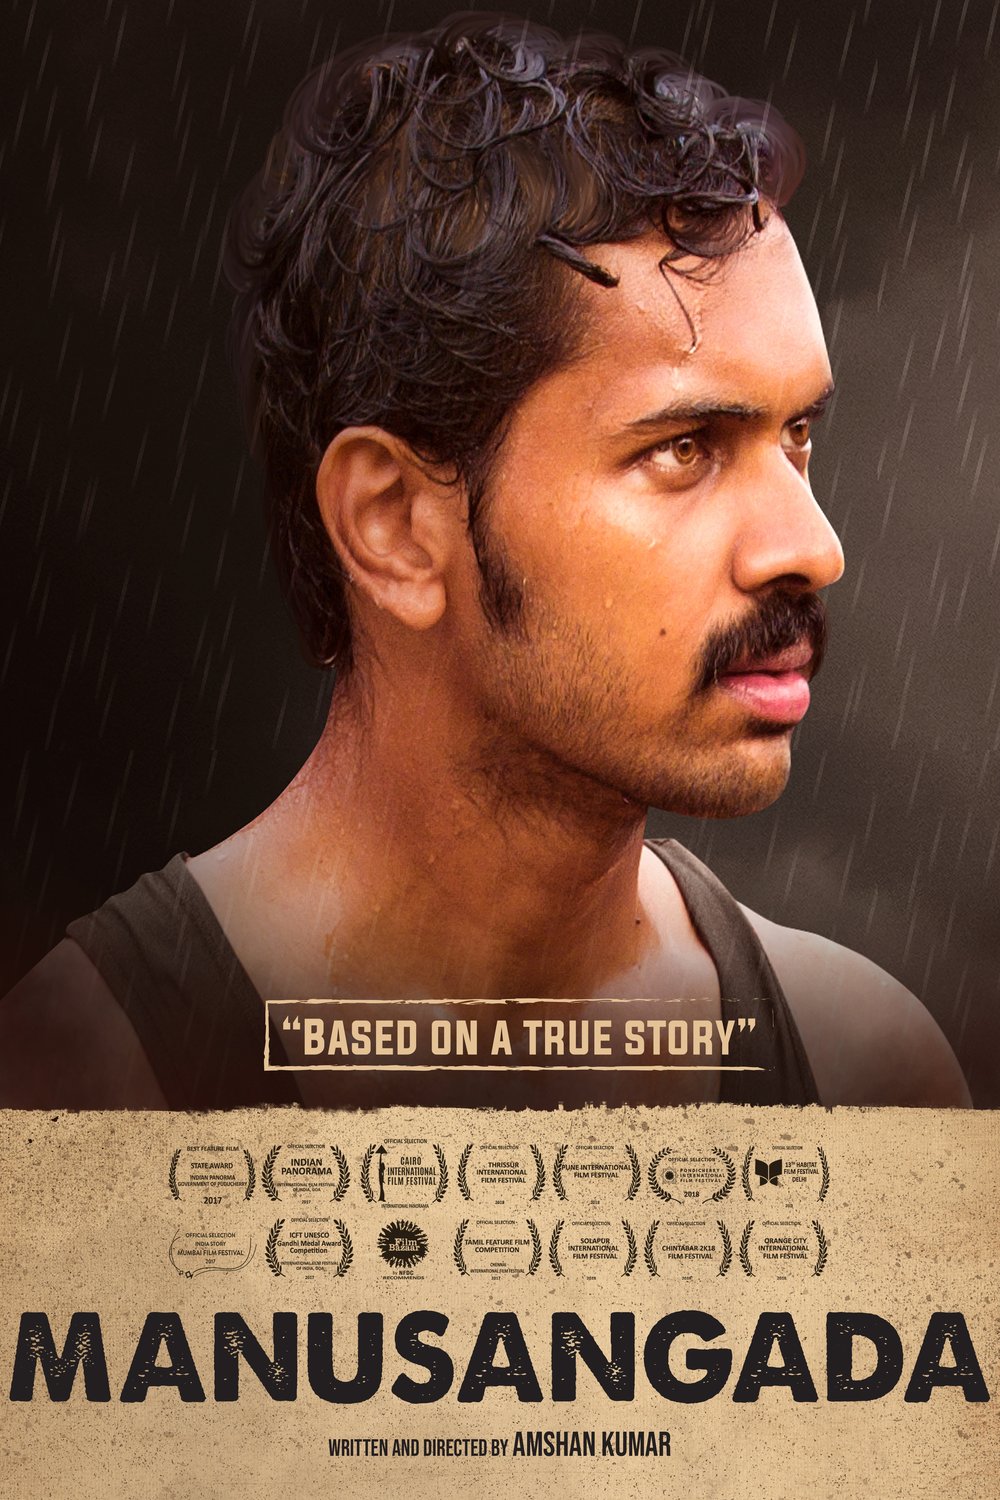 Tamil poster of the movie Manusangada